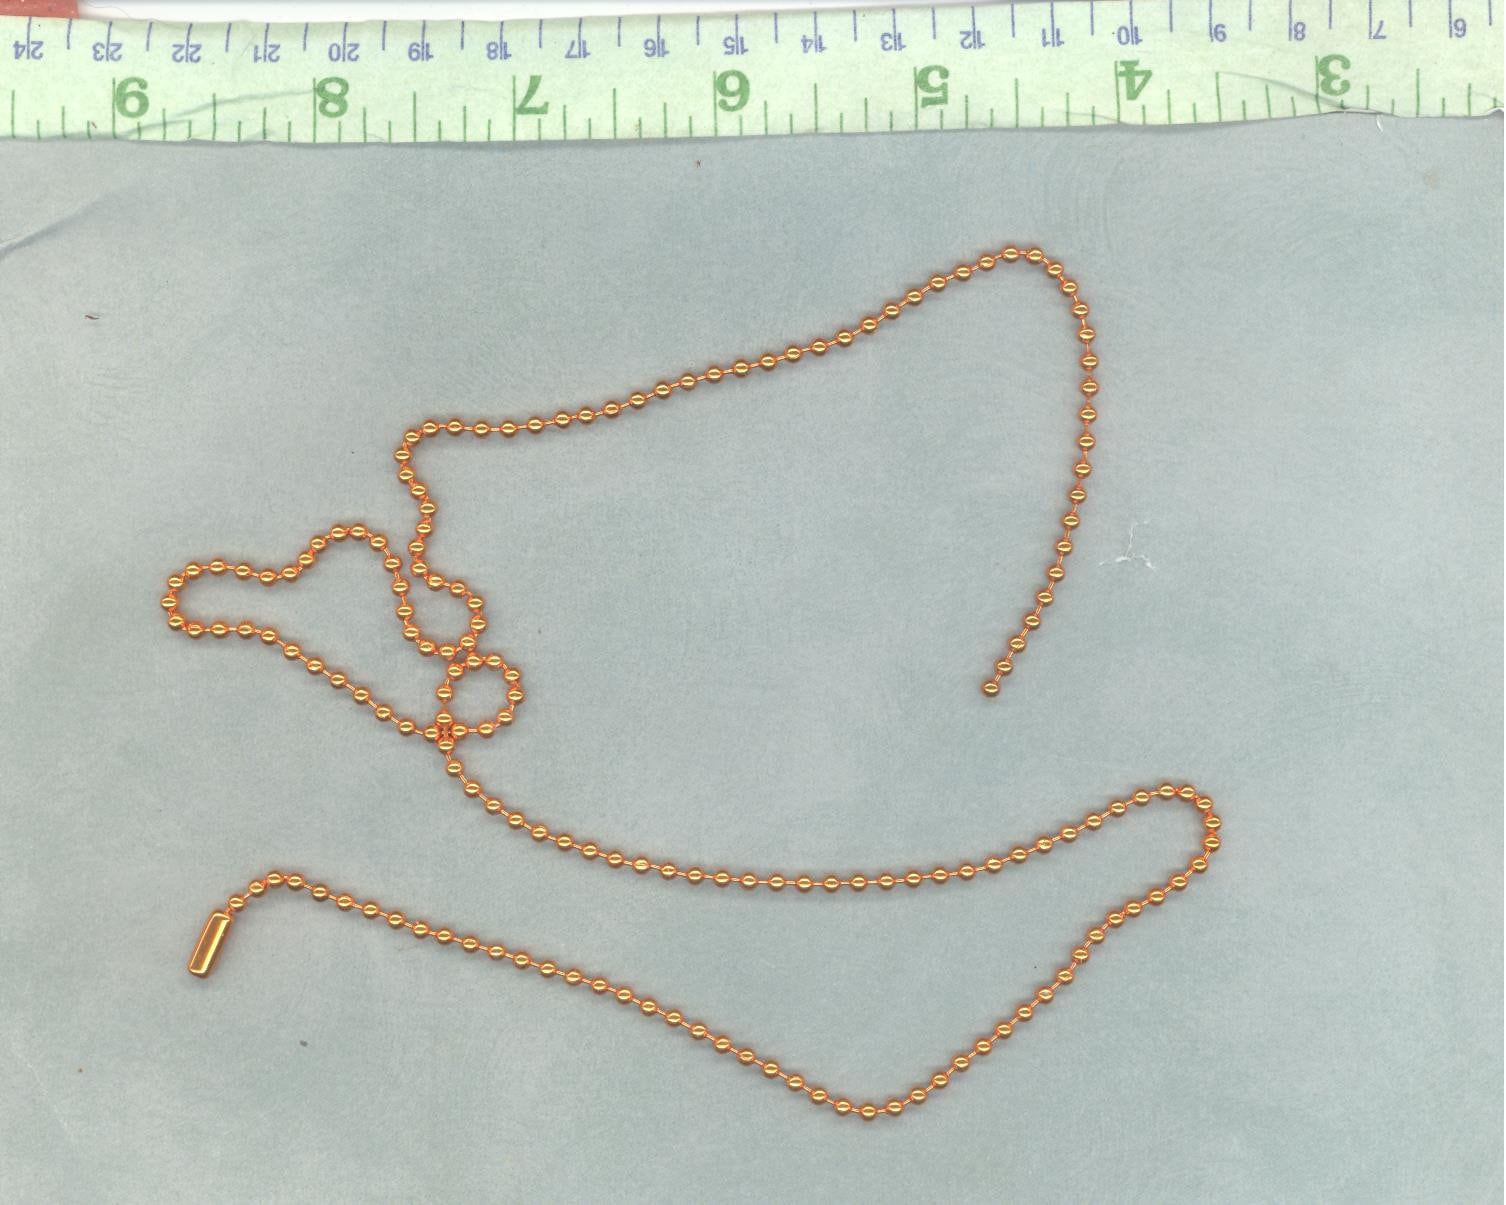 Orange Ball Chain Necklaces - 24 inch - 2.4mm Diameter - Set of 10